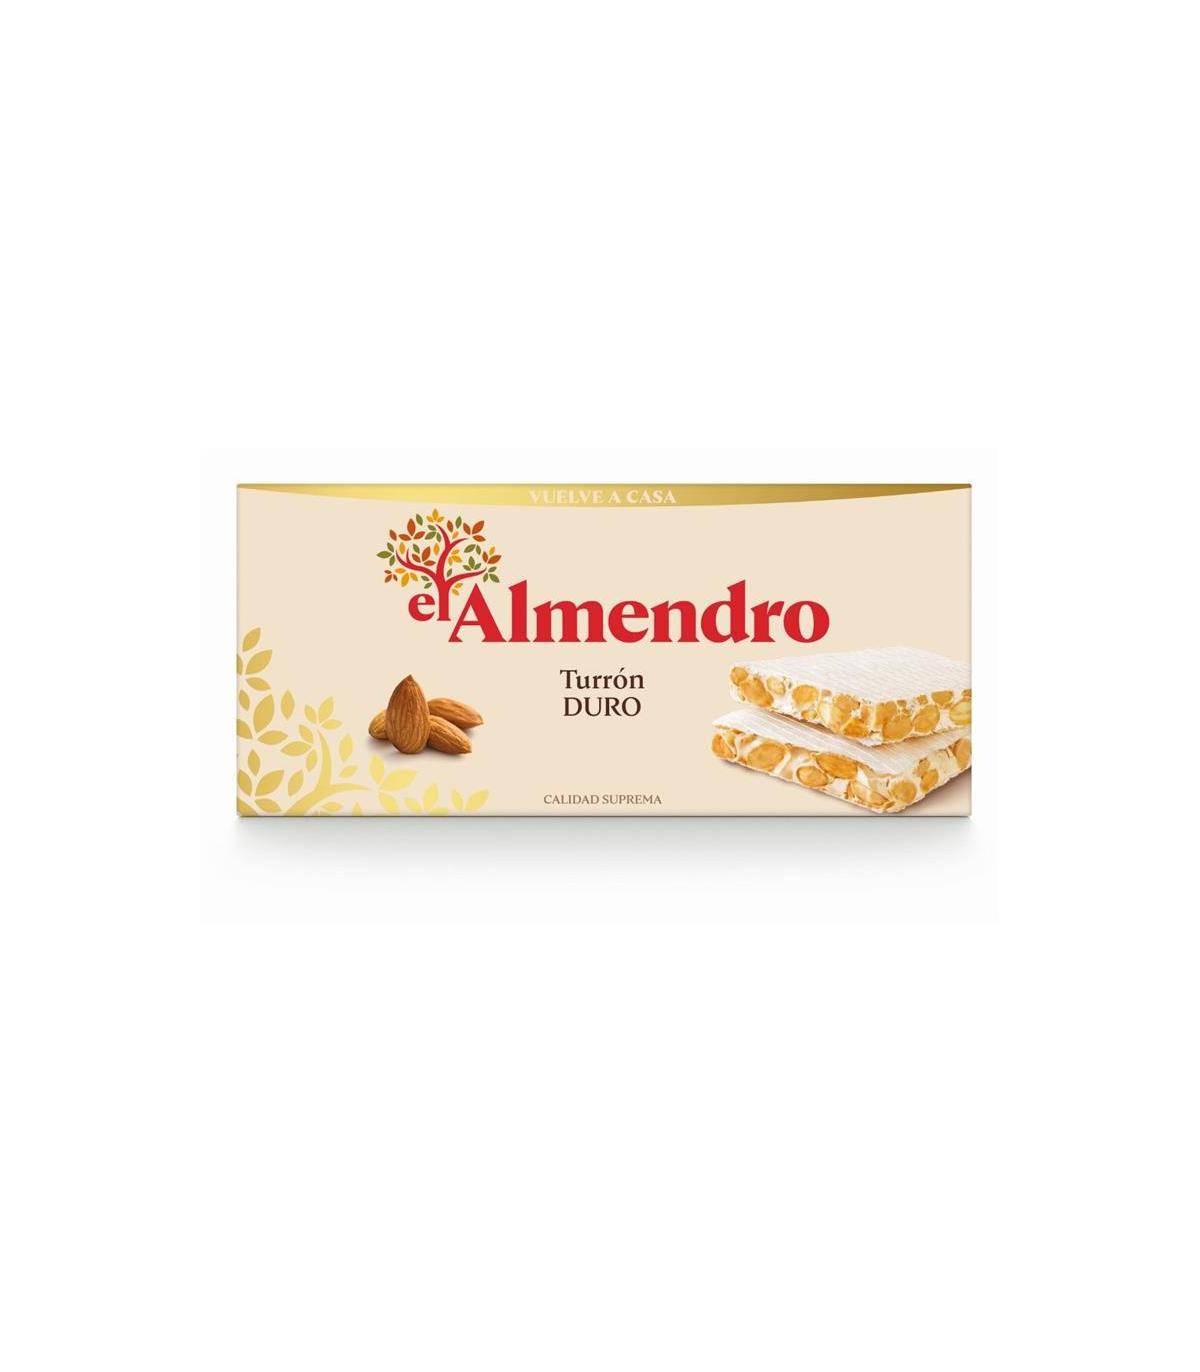 Turrón duro El Almendro - Almond hard turron